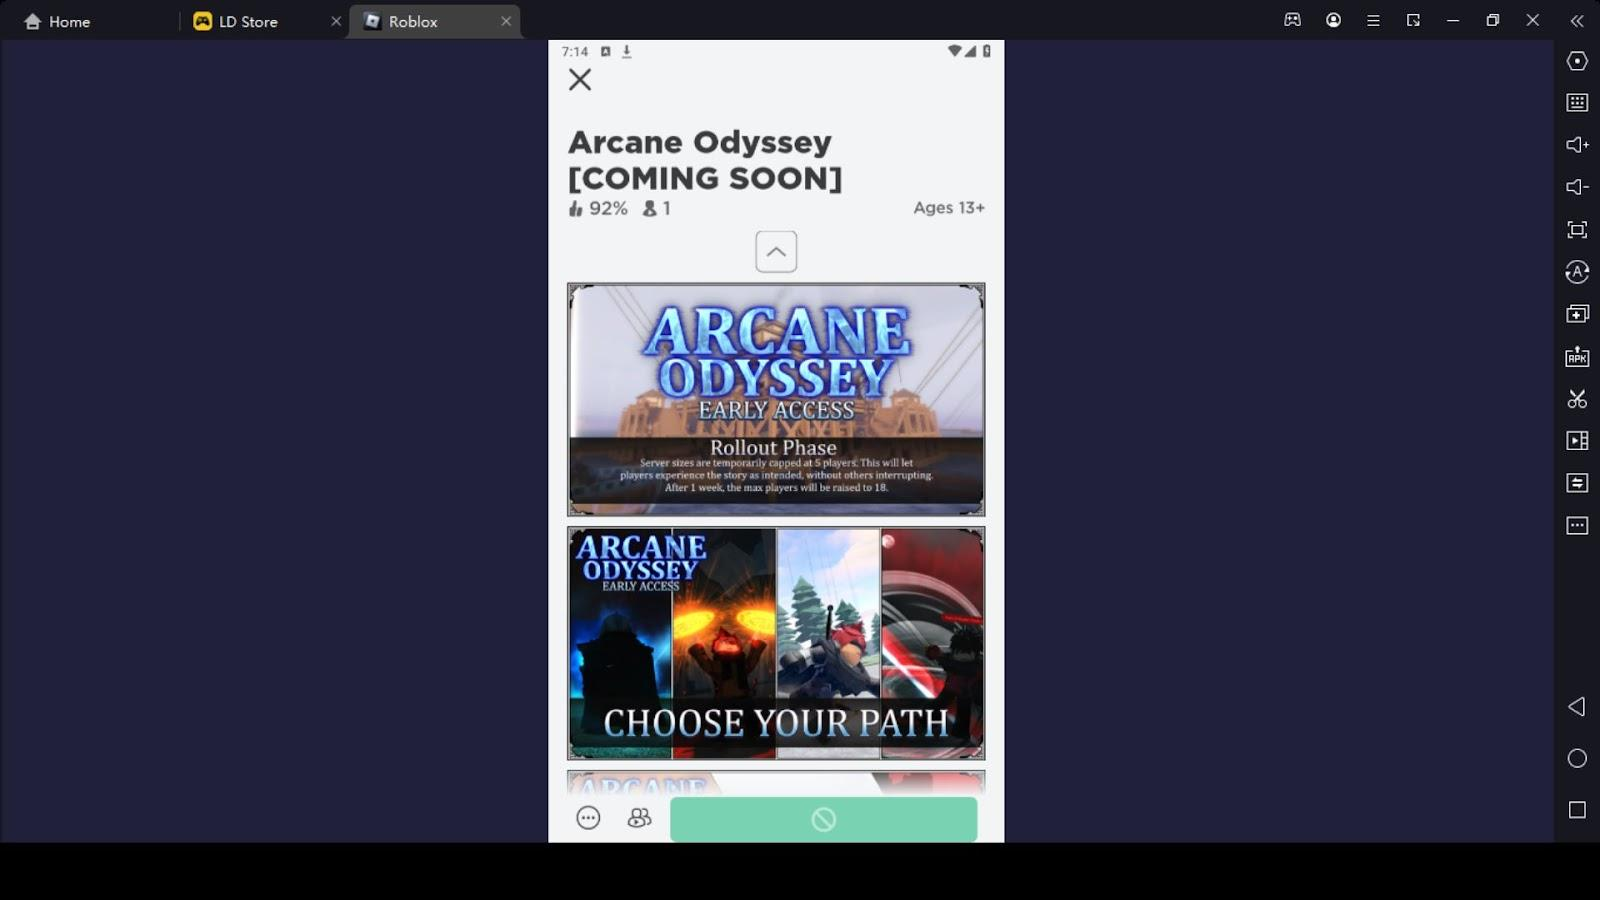 Complete Magics tier list of Arcane Odyssey!